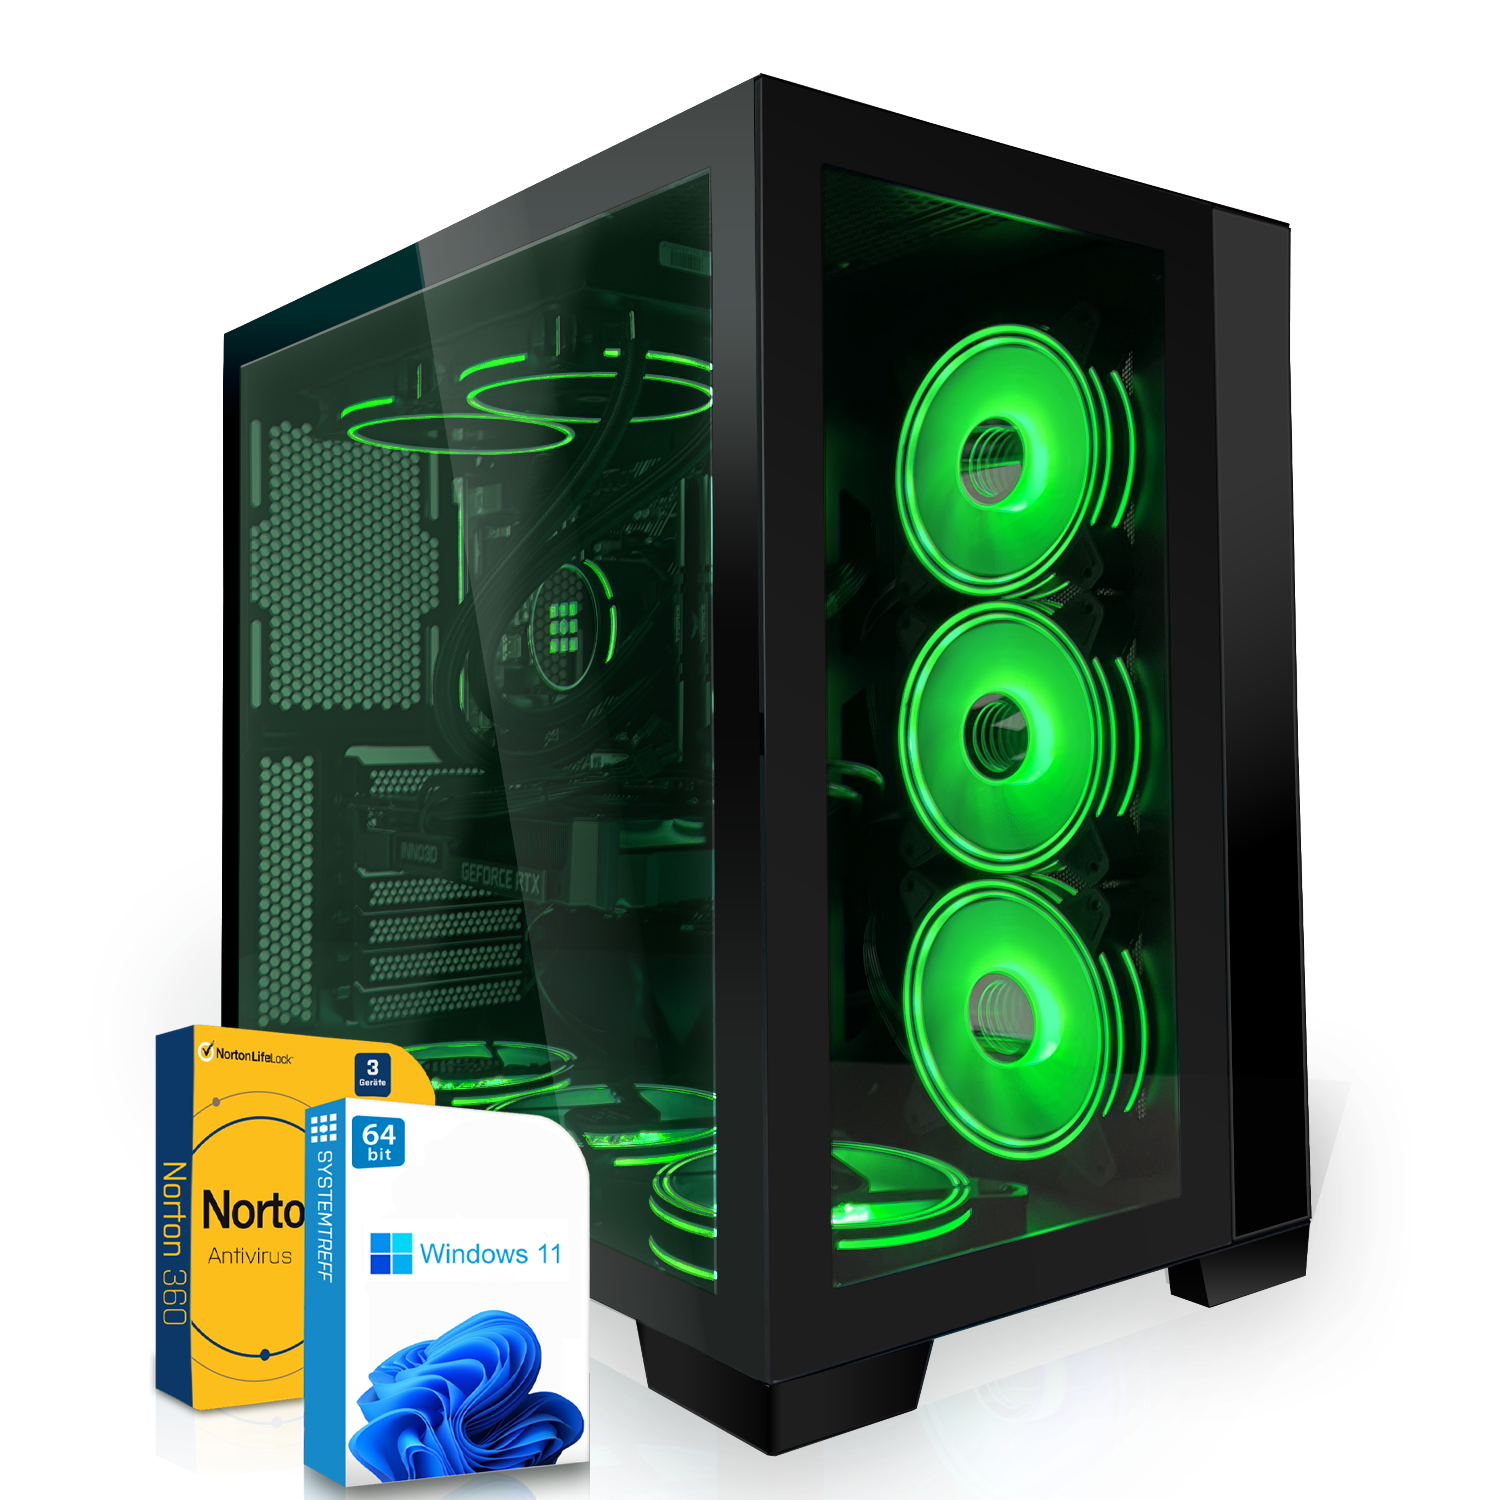 SYSTEMTREFF High-End Gaming RAM, Radeon™ mit RX Gaming 32 XT i9 GB GB Core PC 1000 Intel® Windows mSSD, i9-14900K, 7900 Prozessor, Core™ AMD Intel 11 Pro